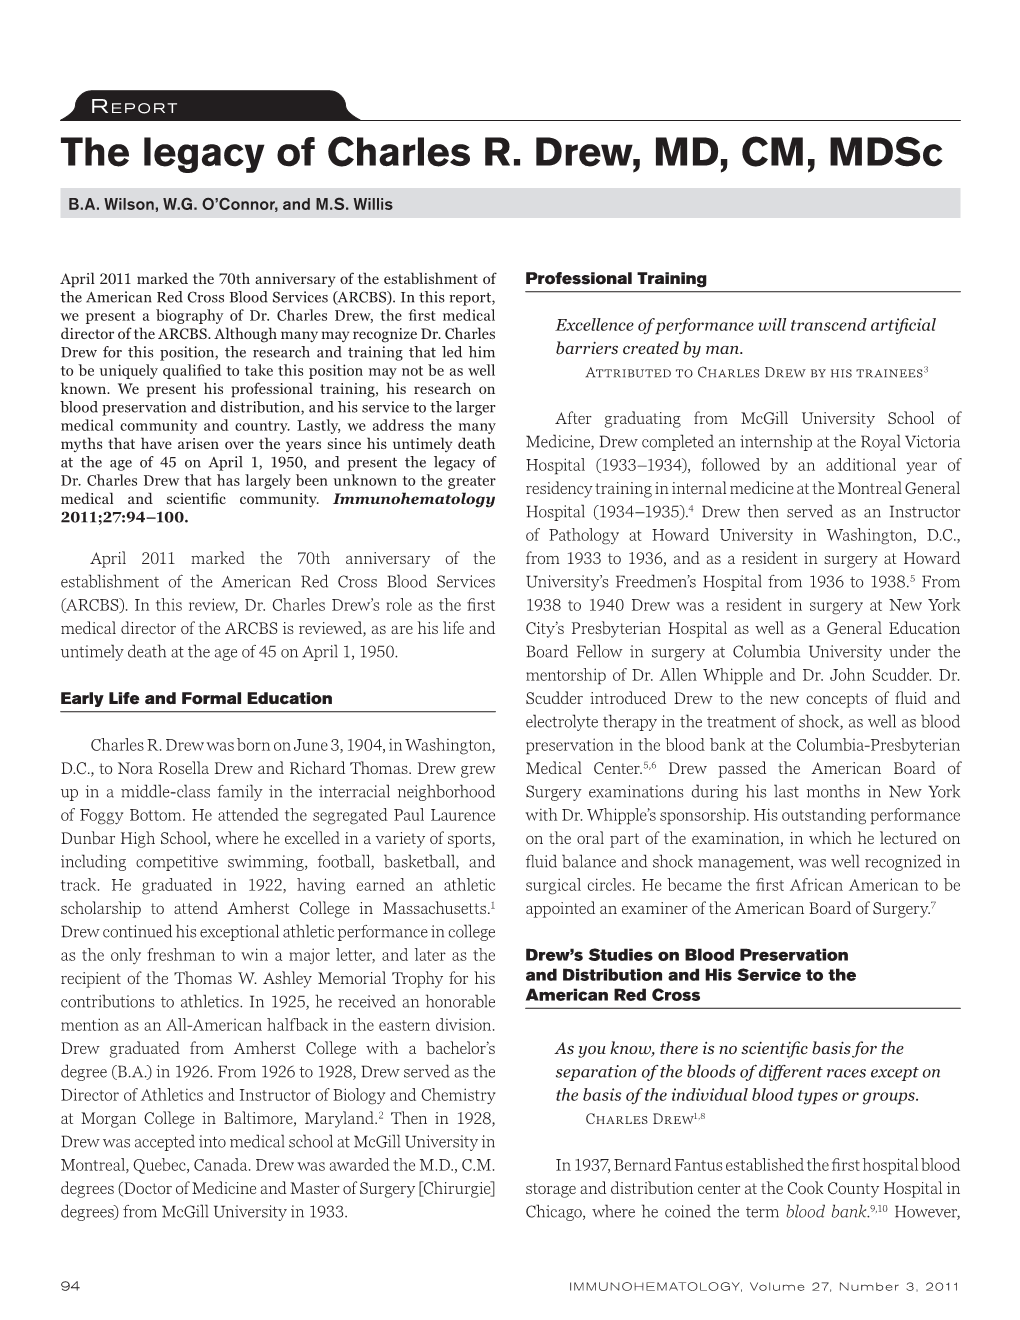 The Legacy of Charles R. Drew, MD, CM, Mdsc